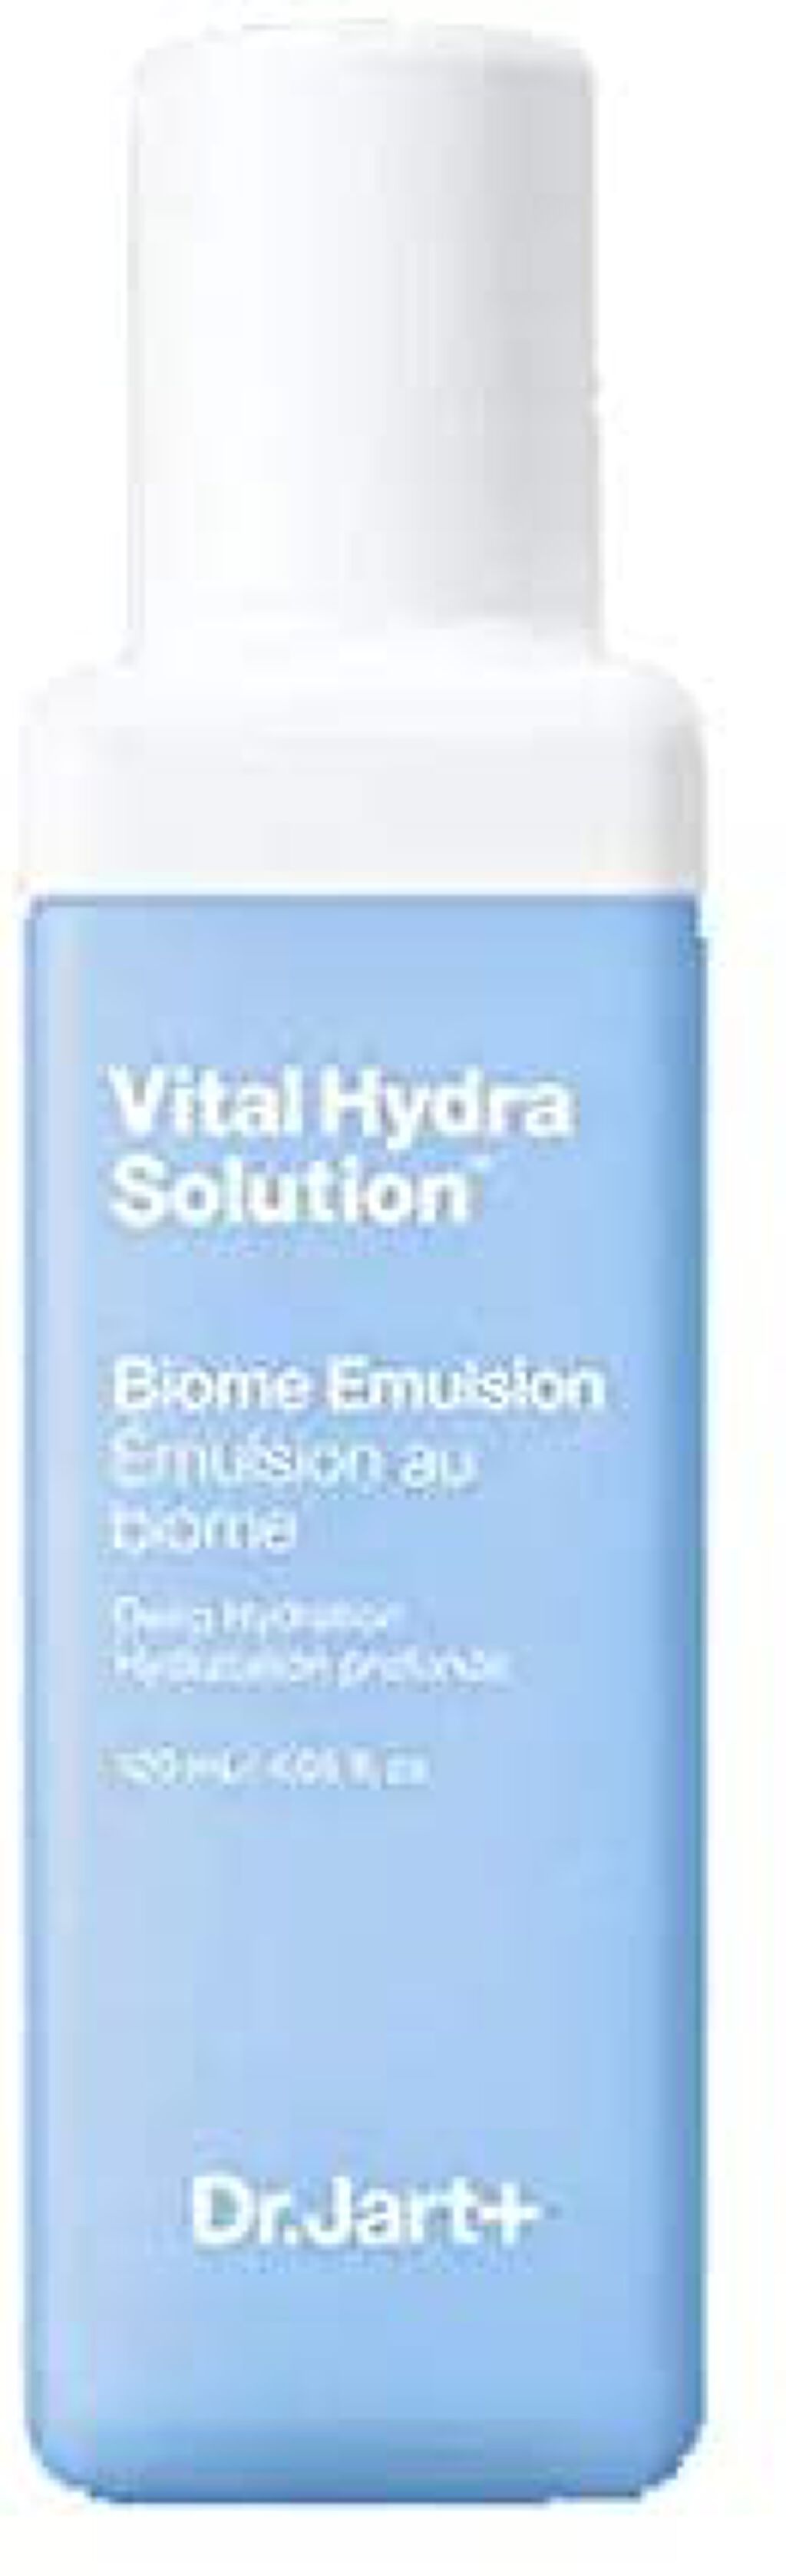 Vital hydra solution biome tor browser особенности hudra